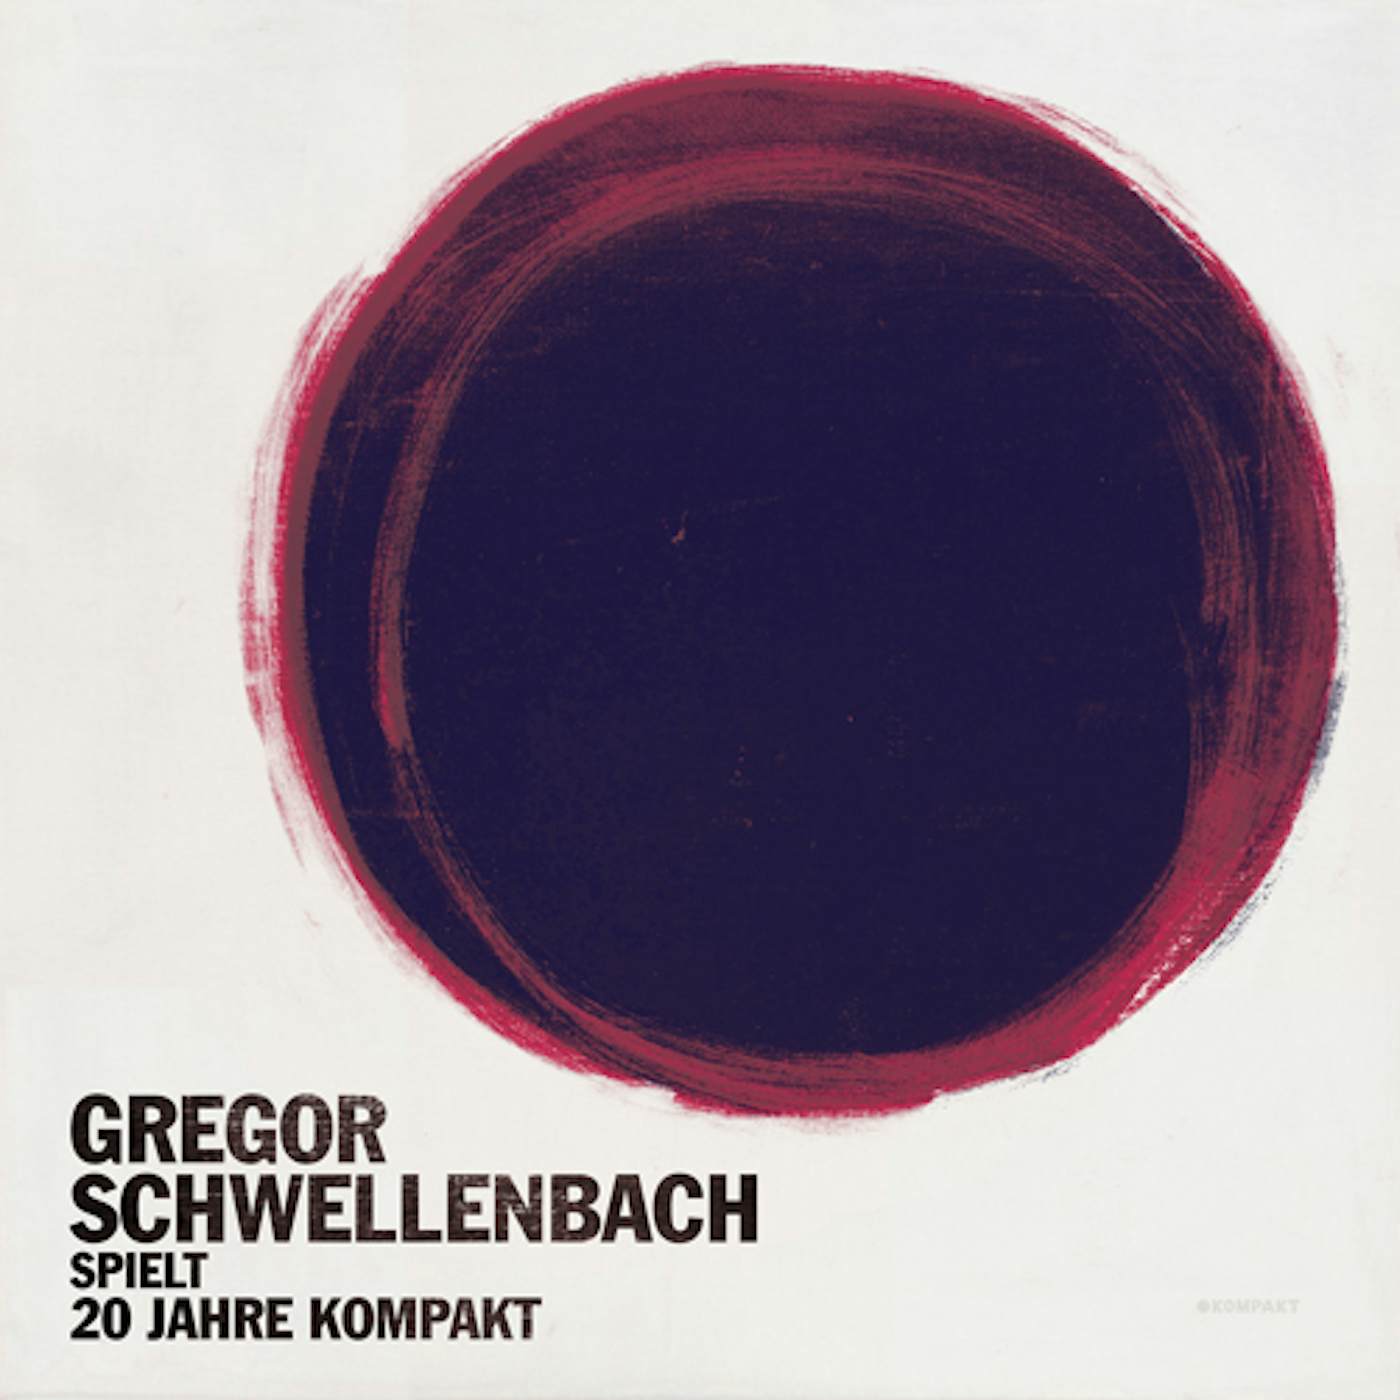 Gregor Schwellenbach SPIELT 20 JAHRE KOMPAKT CD